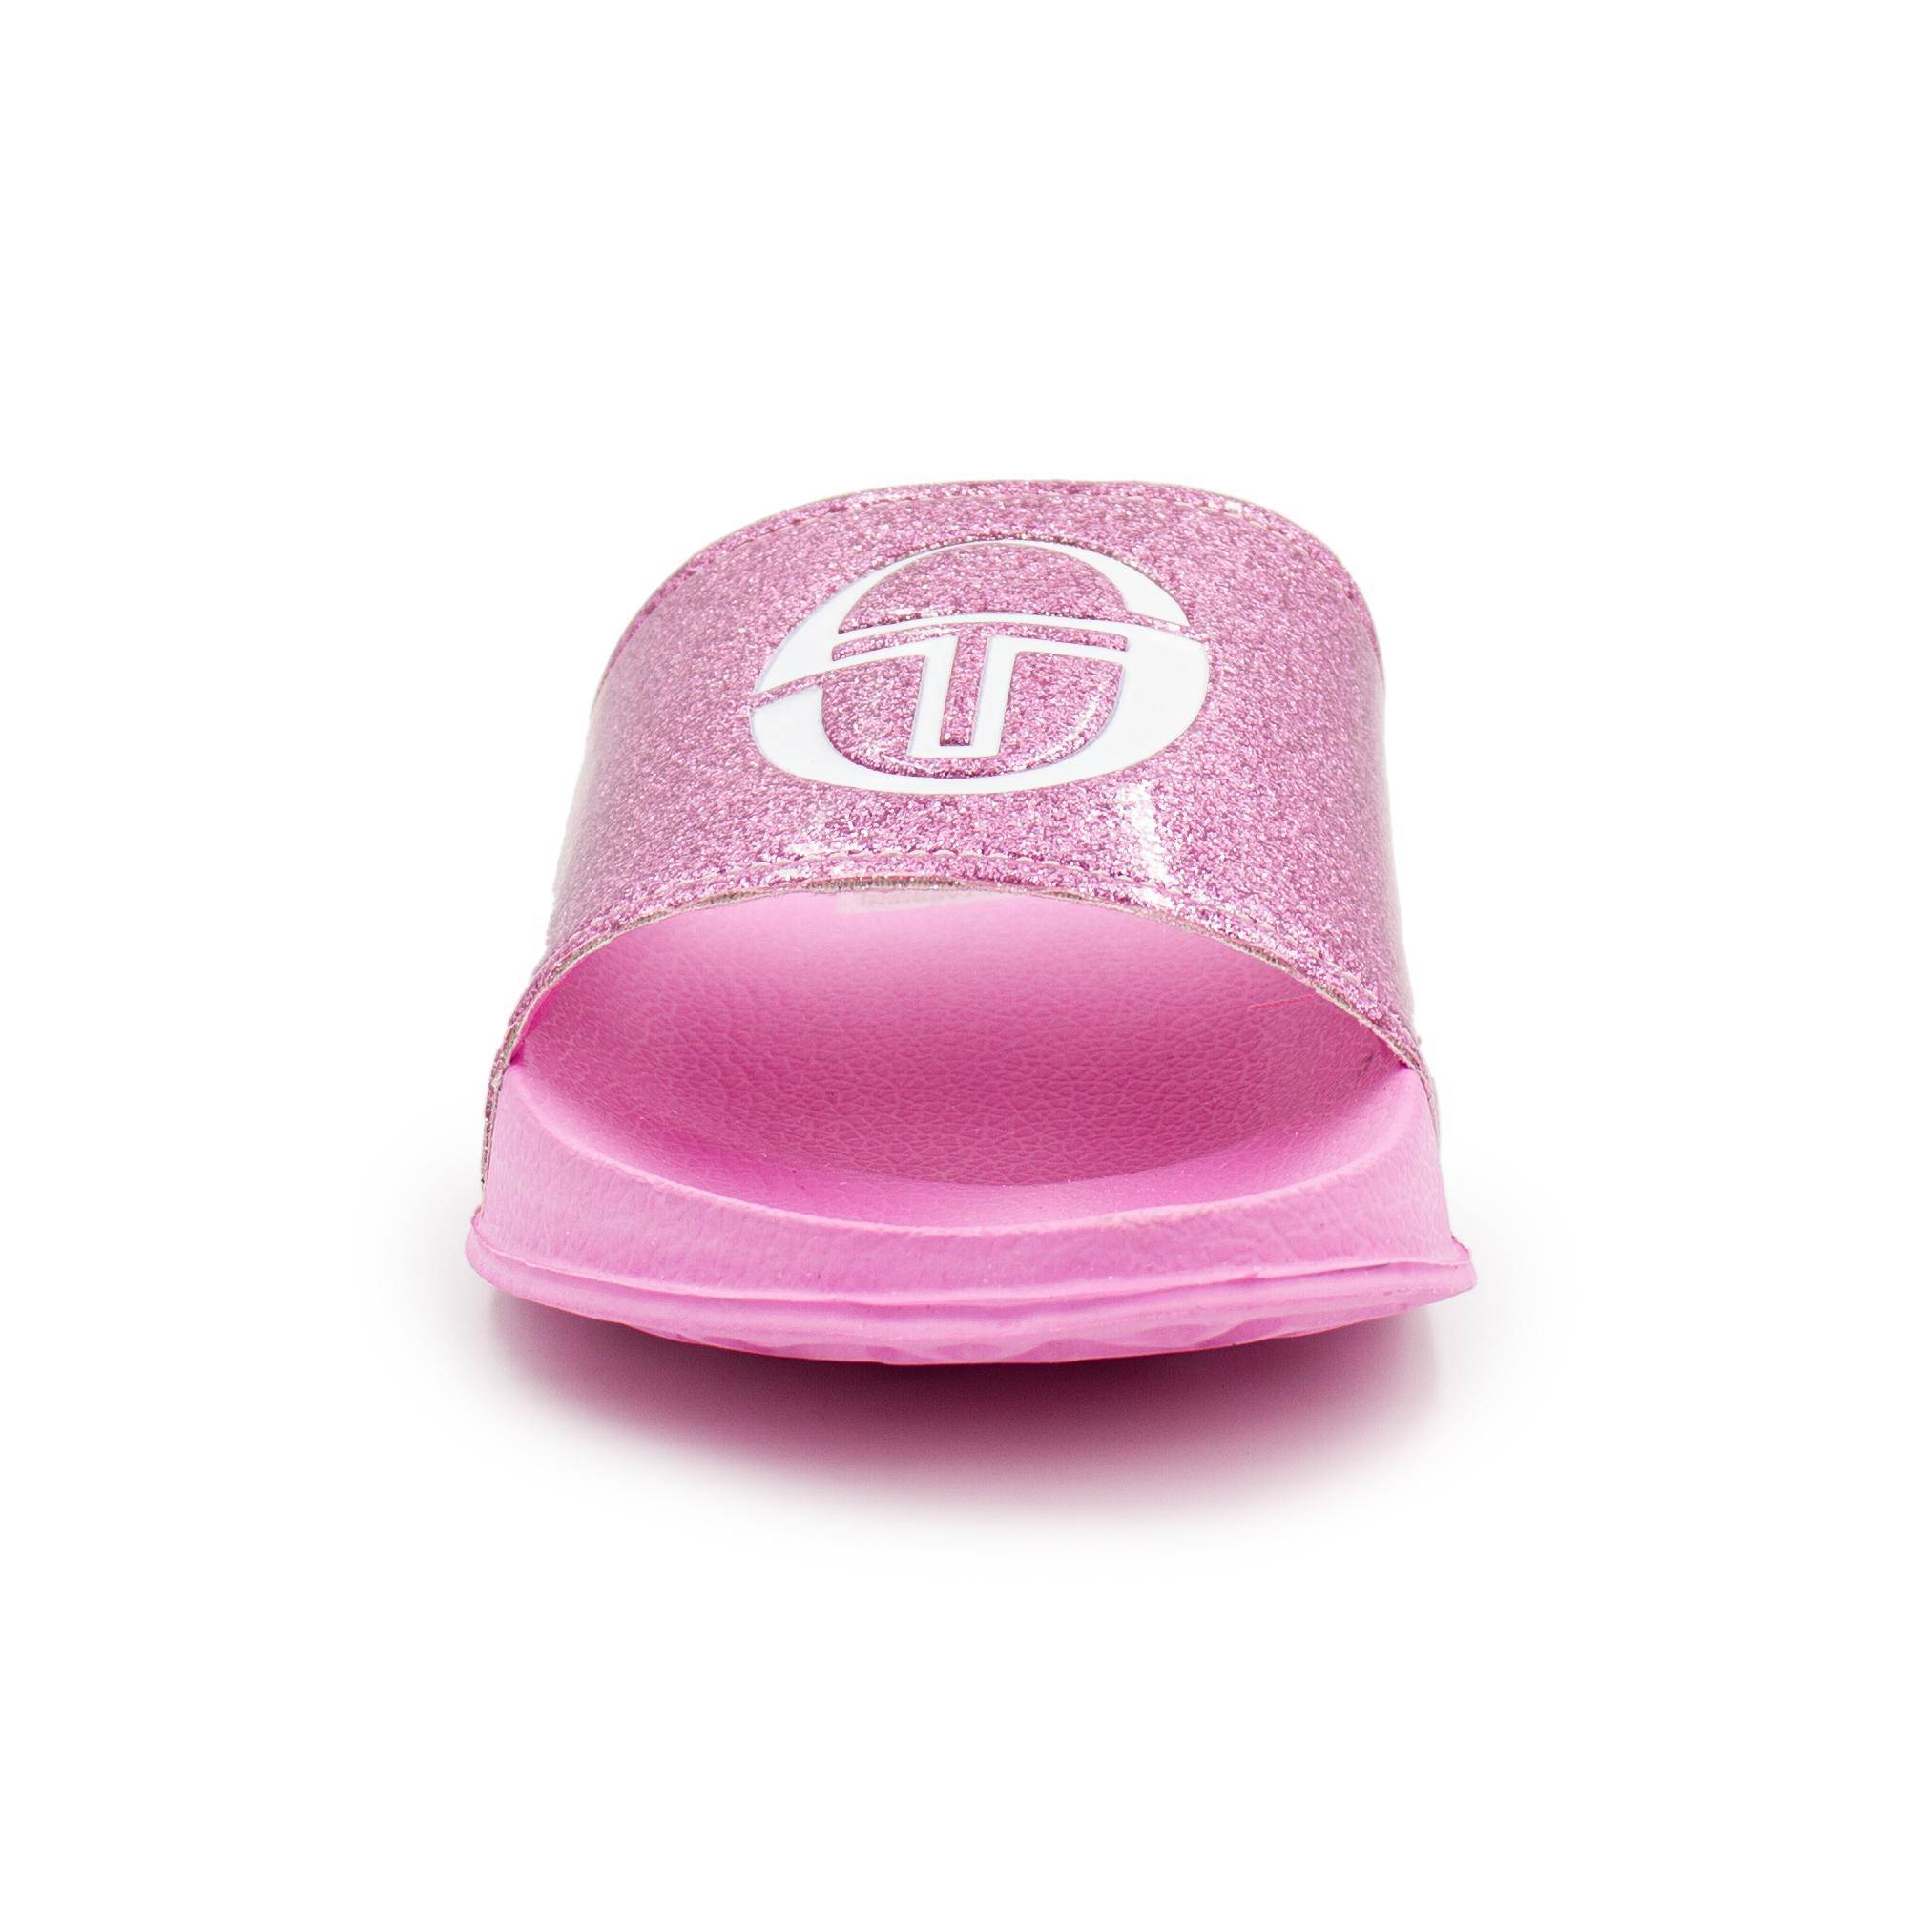 Женские сланцы Sergio Tacchini (REMIX GLITTER STW219006), розовые, цвет розовый, размер 36 - фото 3